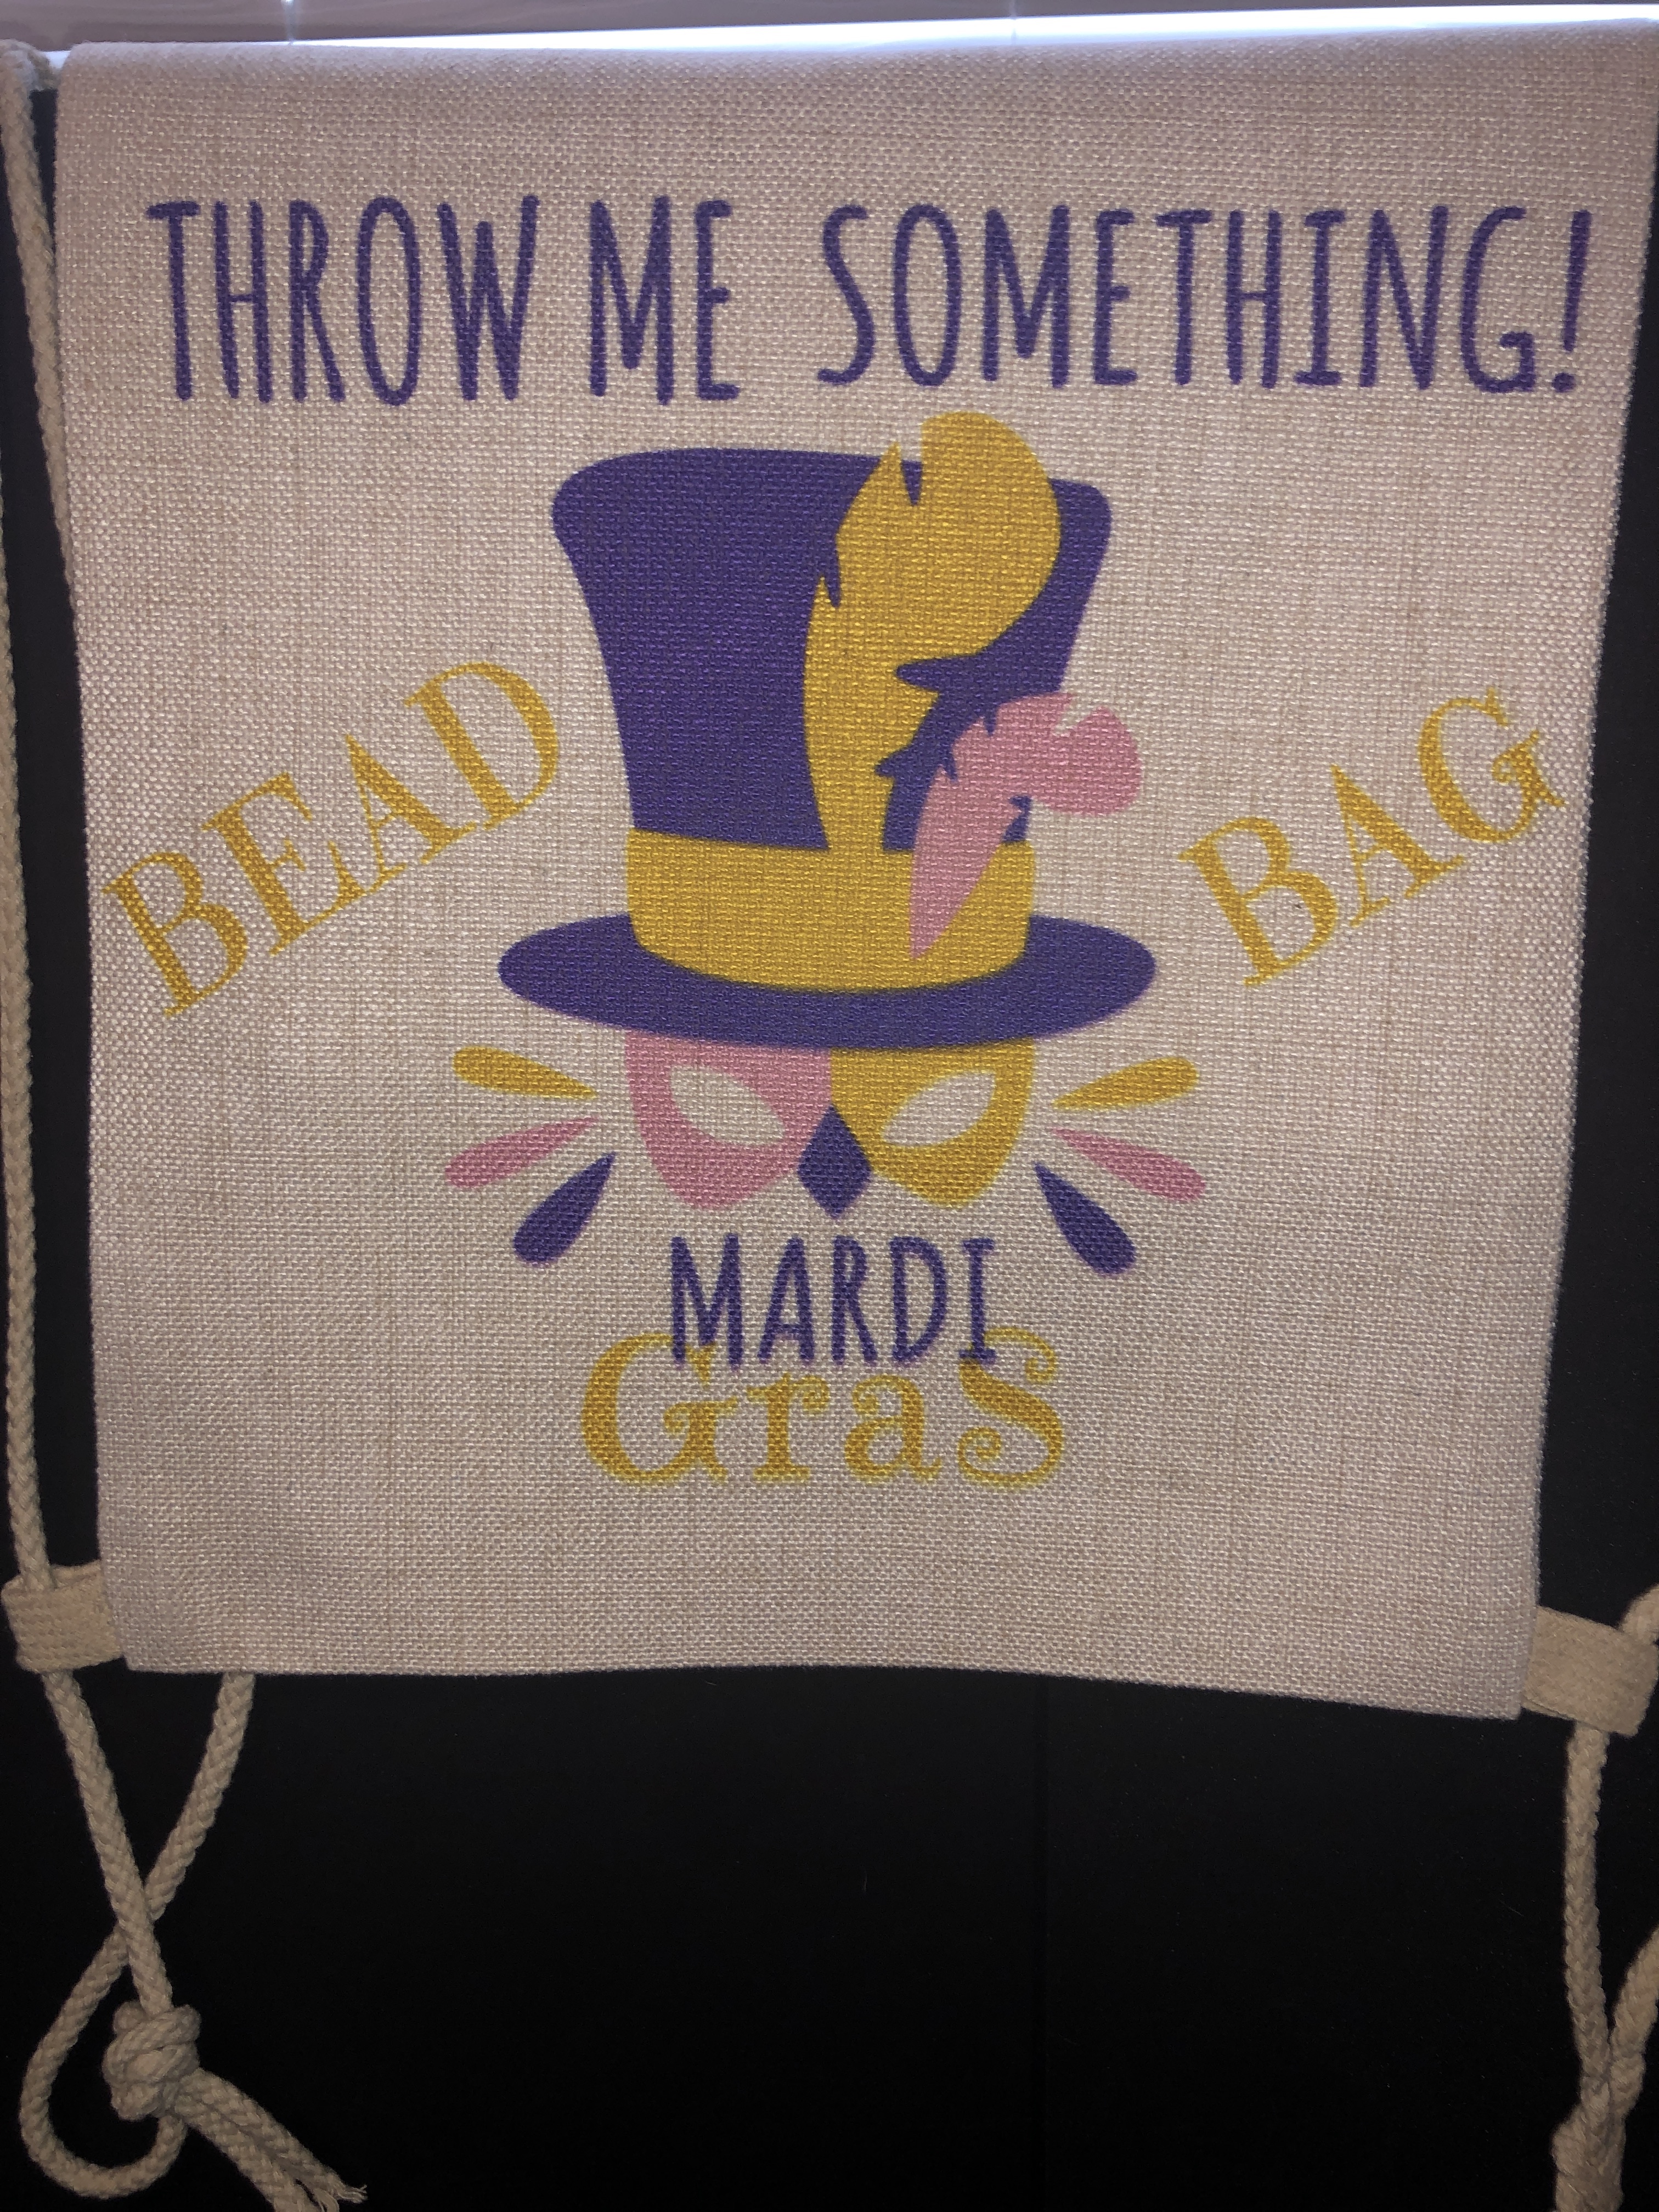 Mardi Gras Bead Bag made with sublimation printing